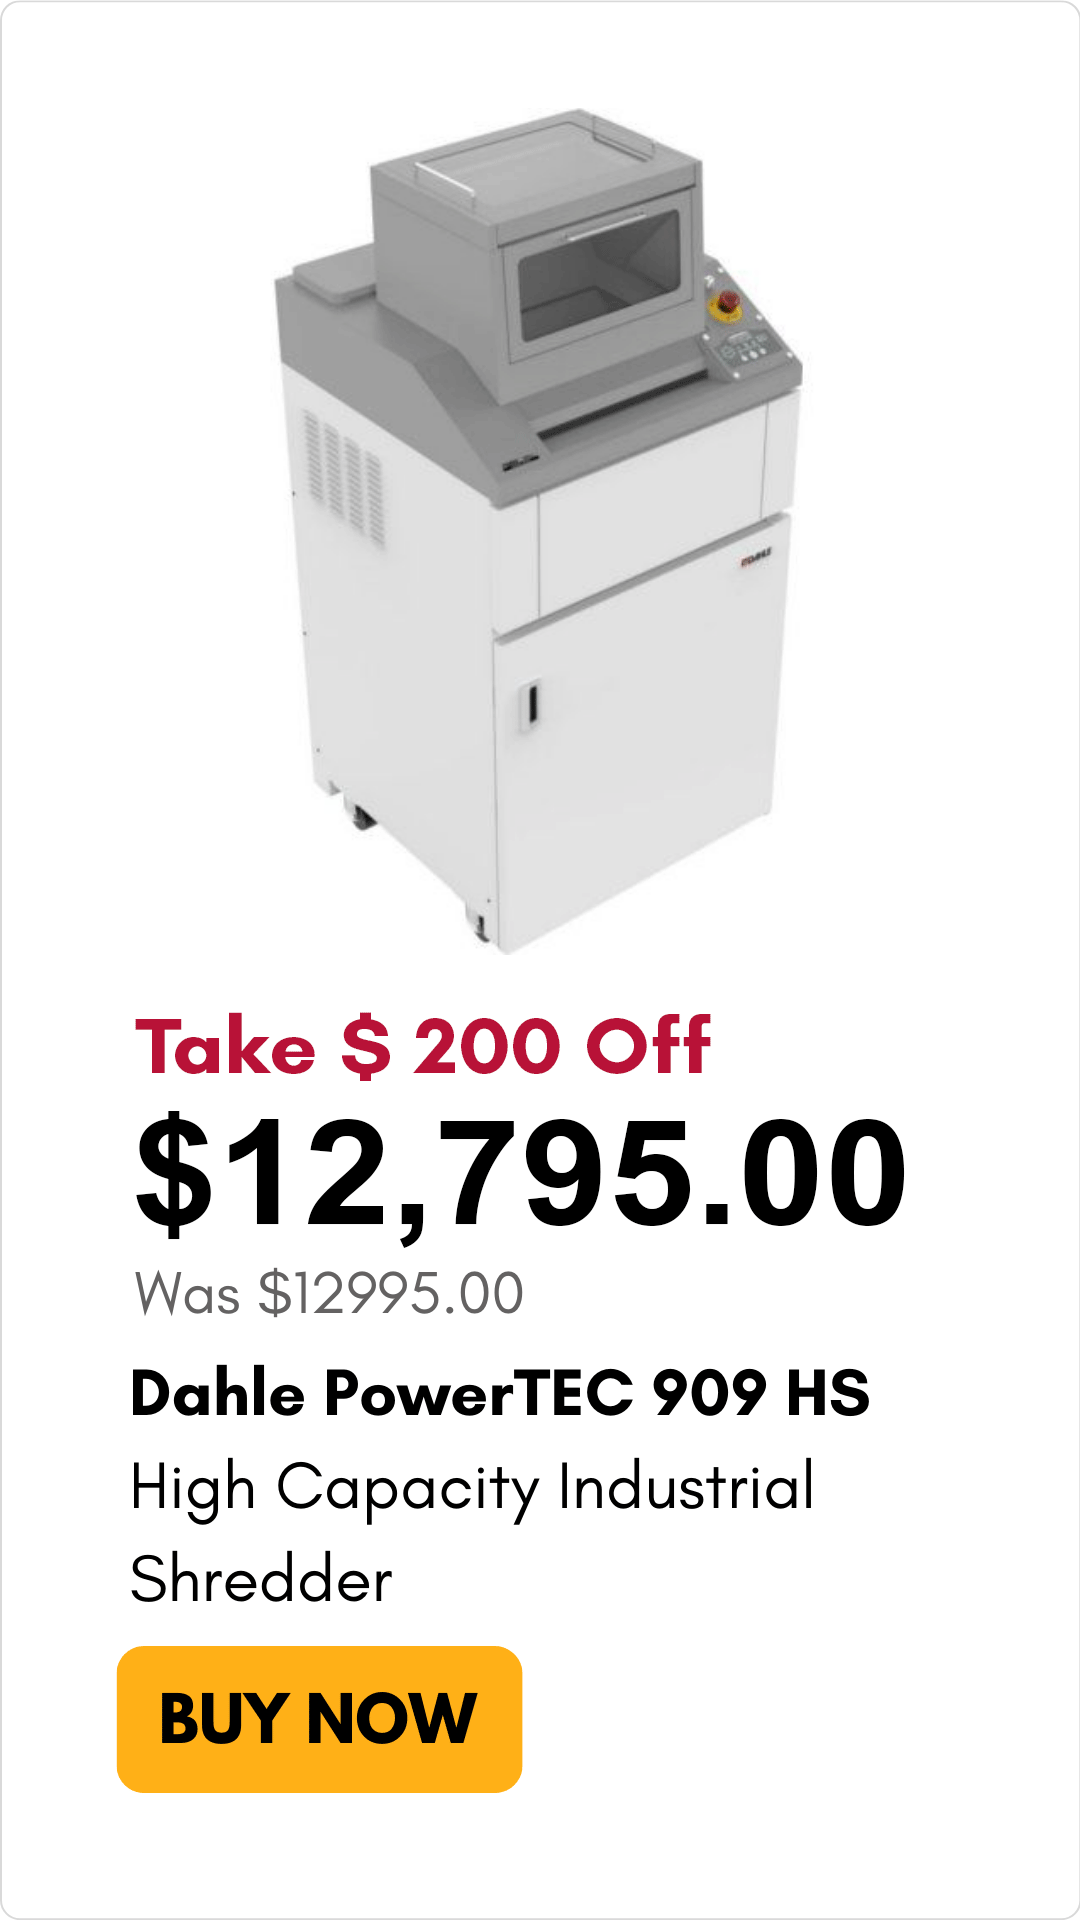 Dahle PowerTEC 909 HS High Capacity Industrial Shredder on sale for $200 off